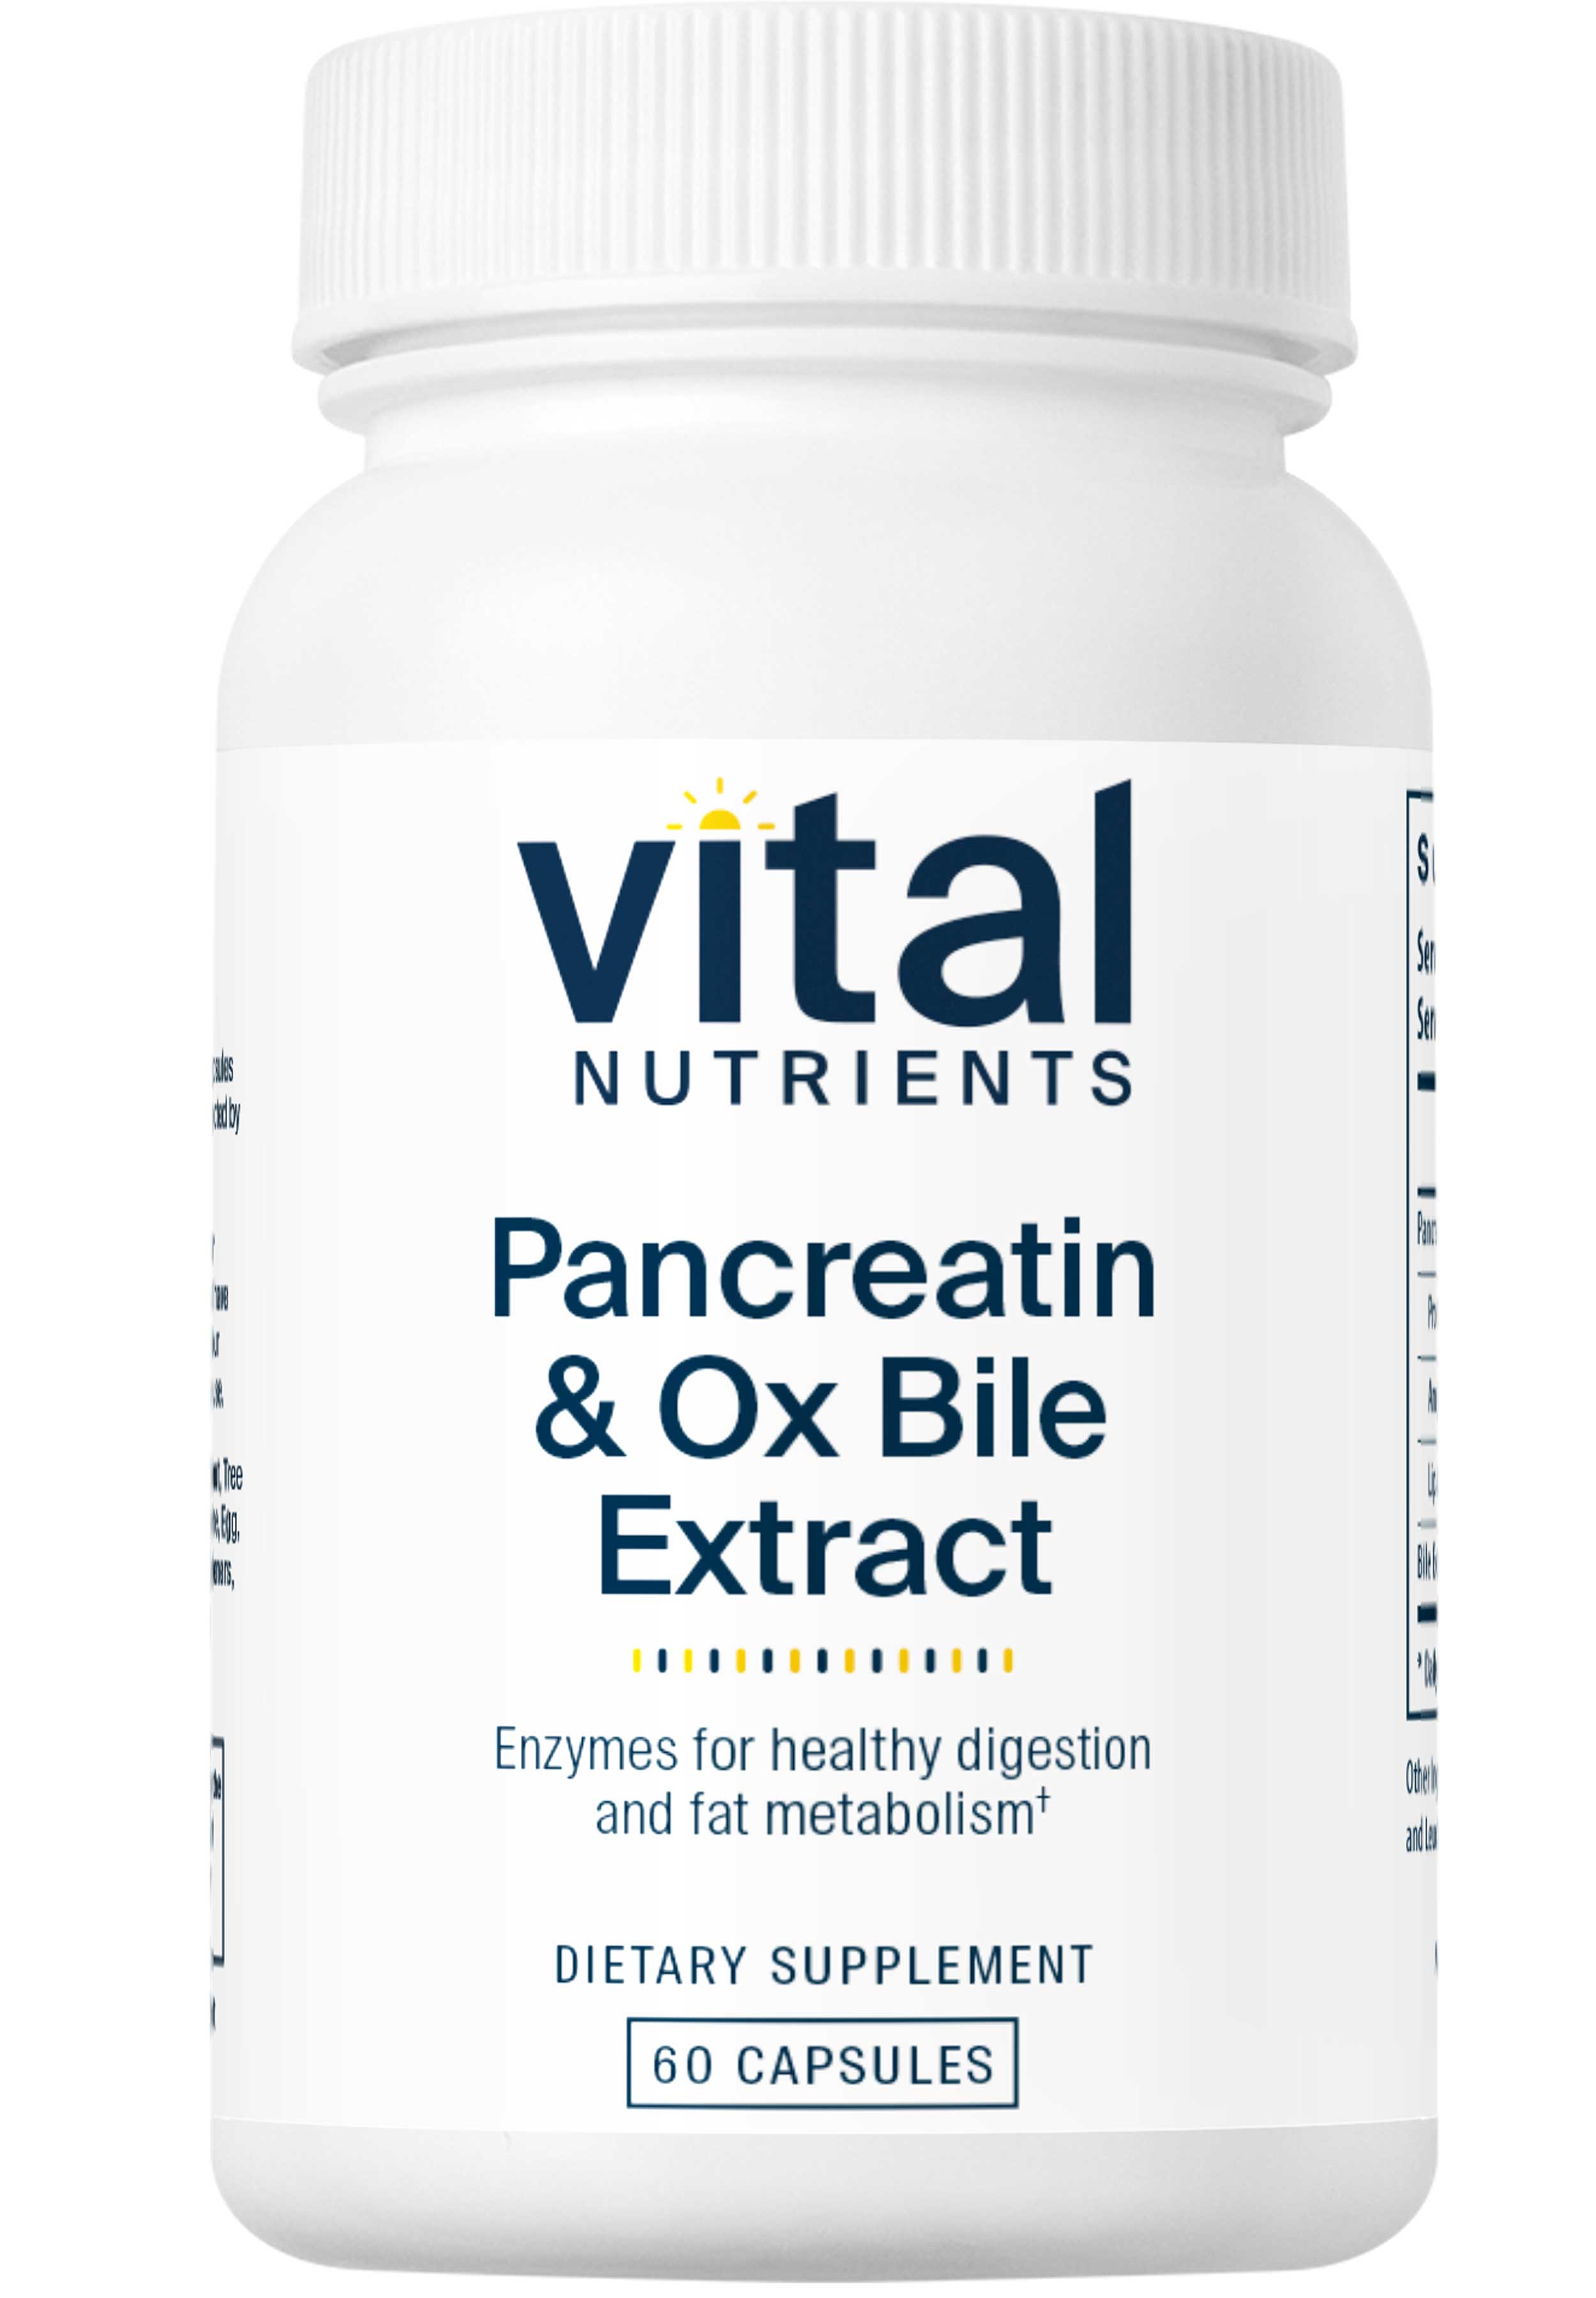 Vital Nutrients Pancreatin & Ox Bile Extract